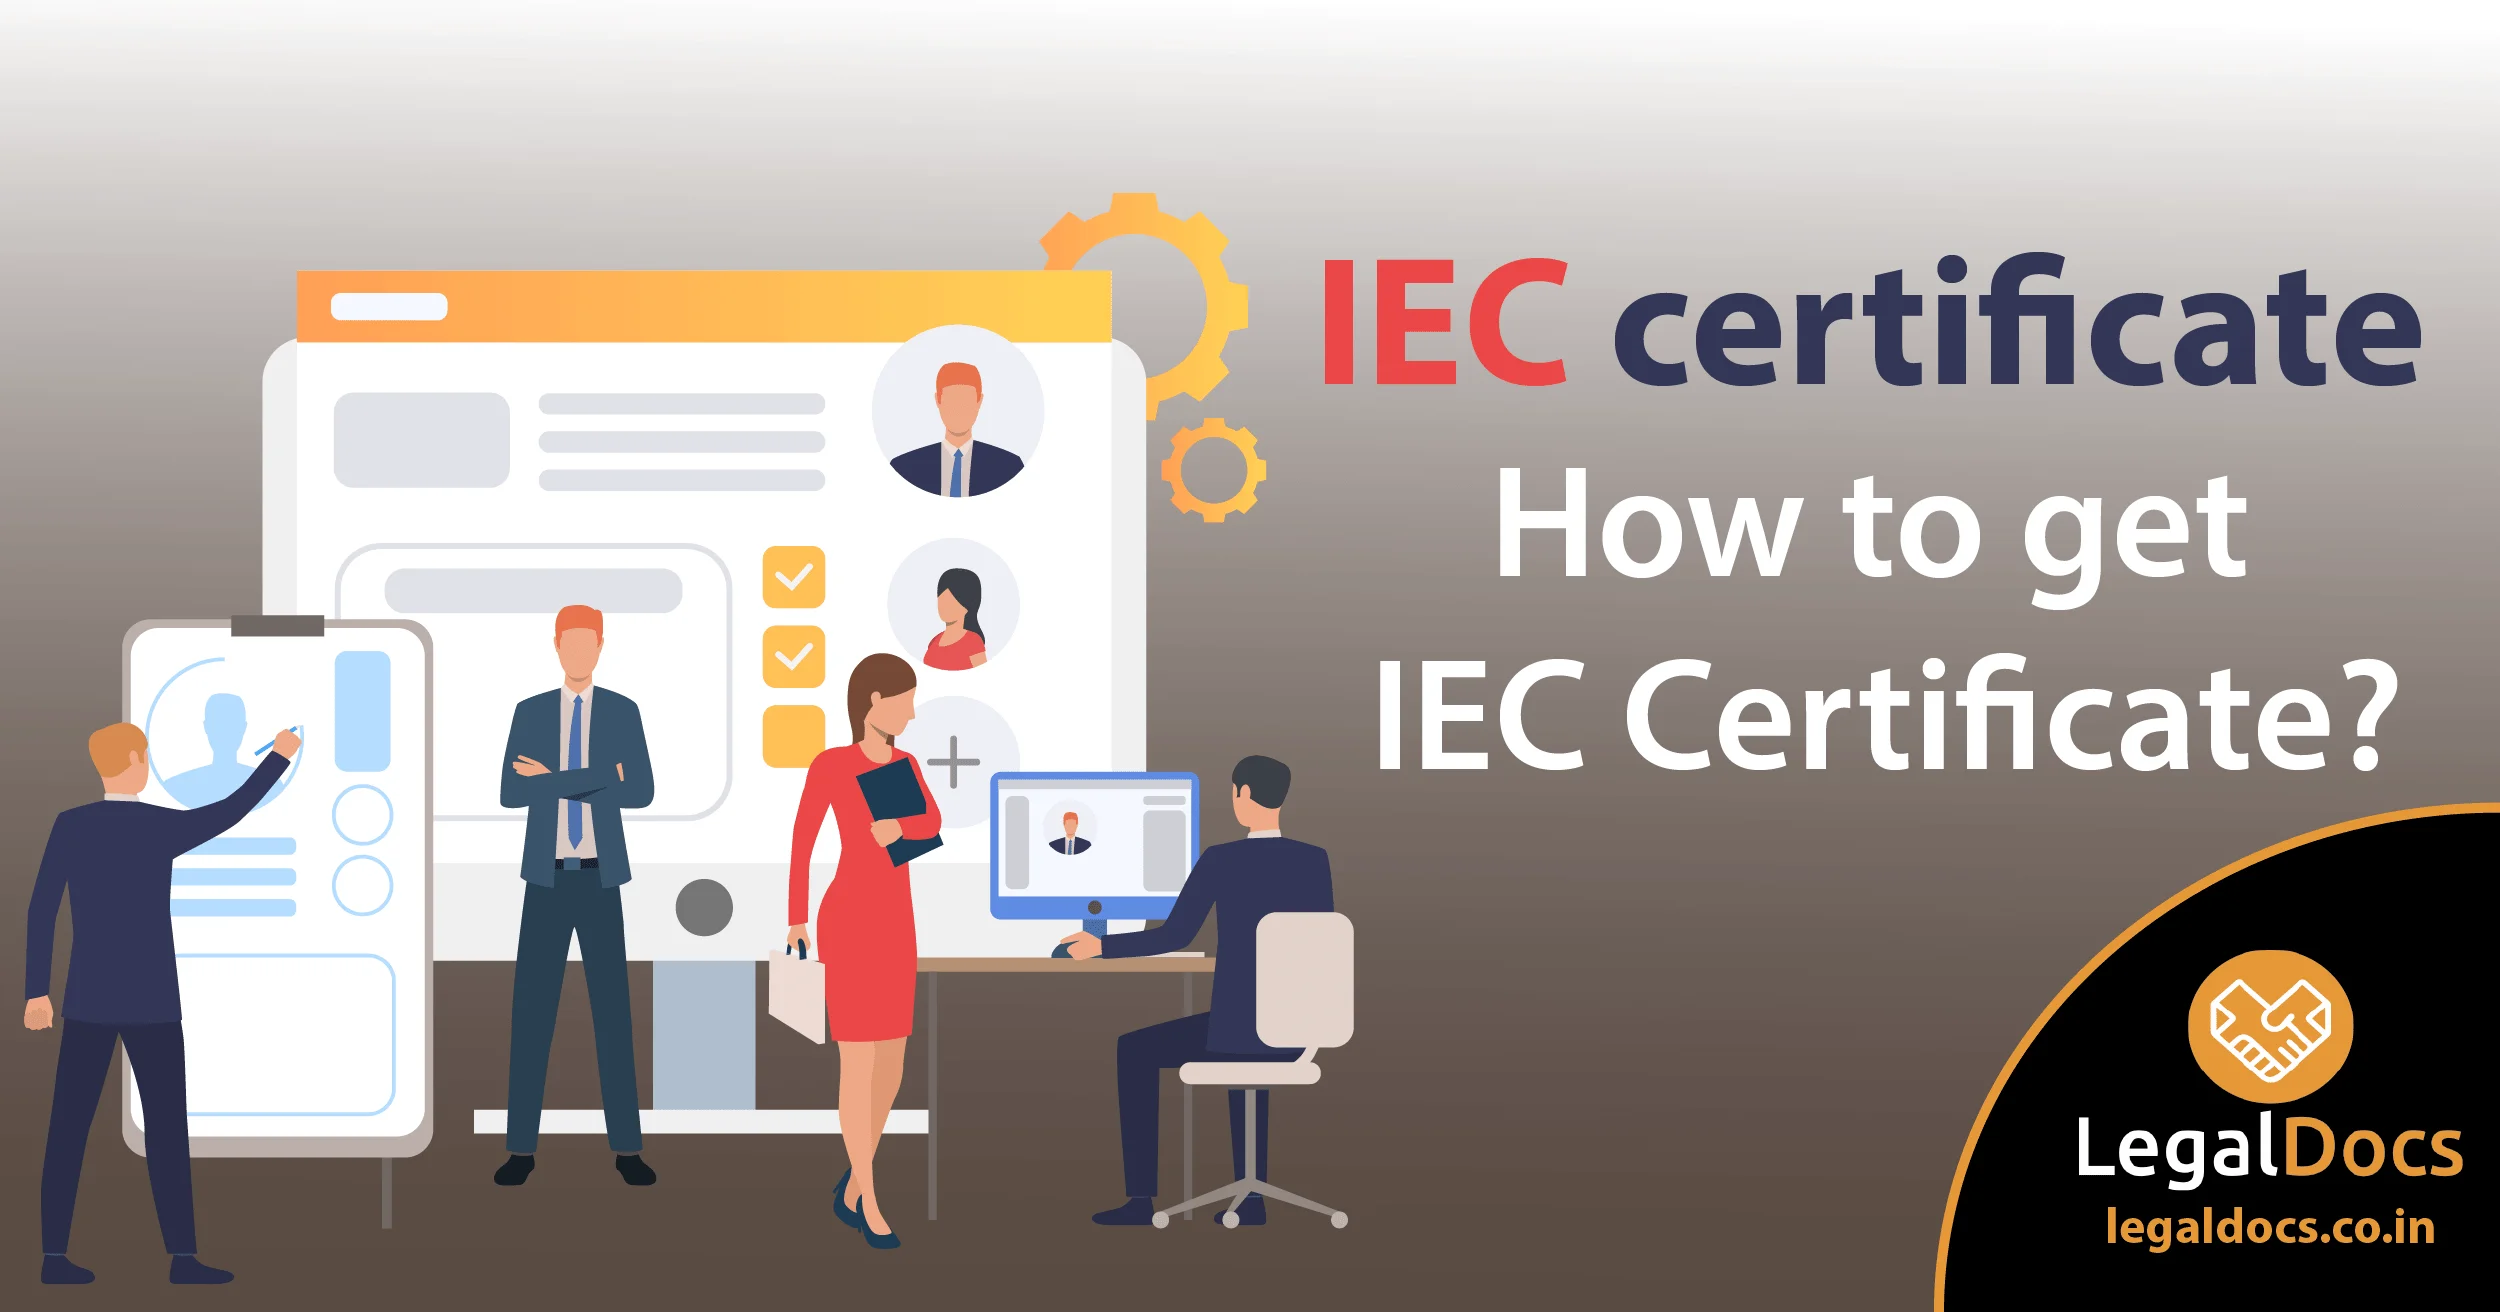 IEC certificate - How to get IEC Certificate? - LegalDocs